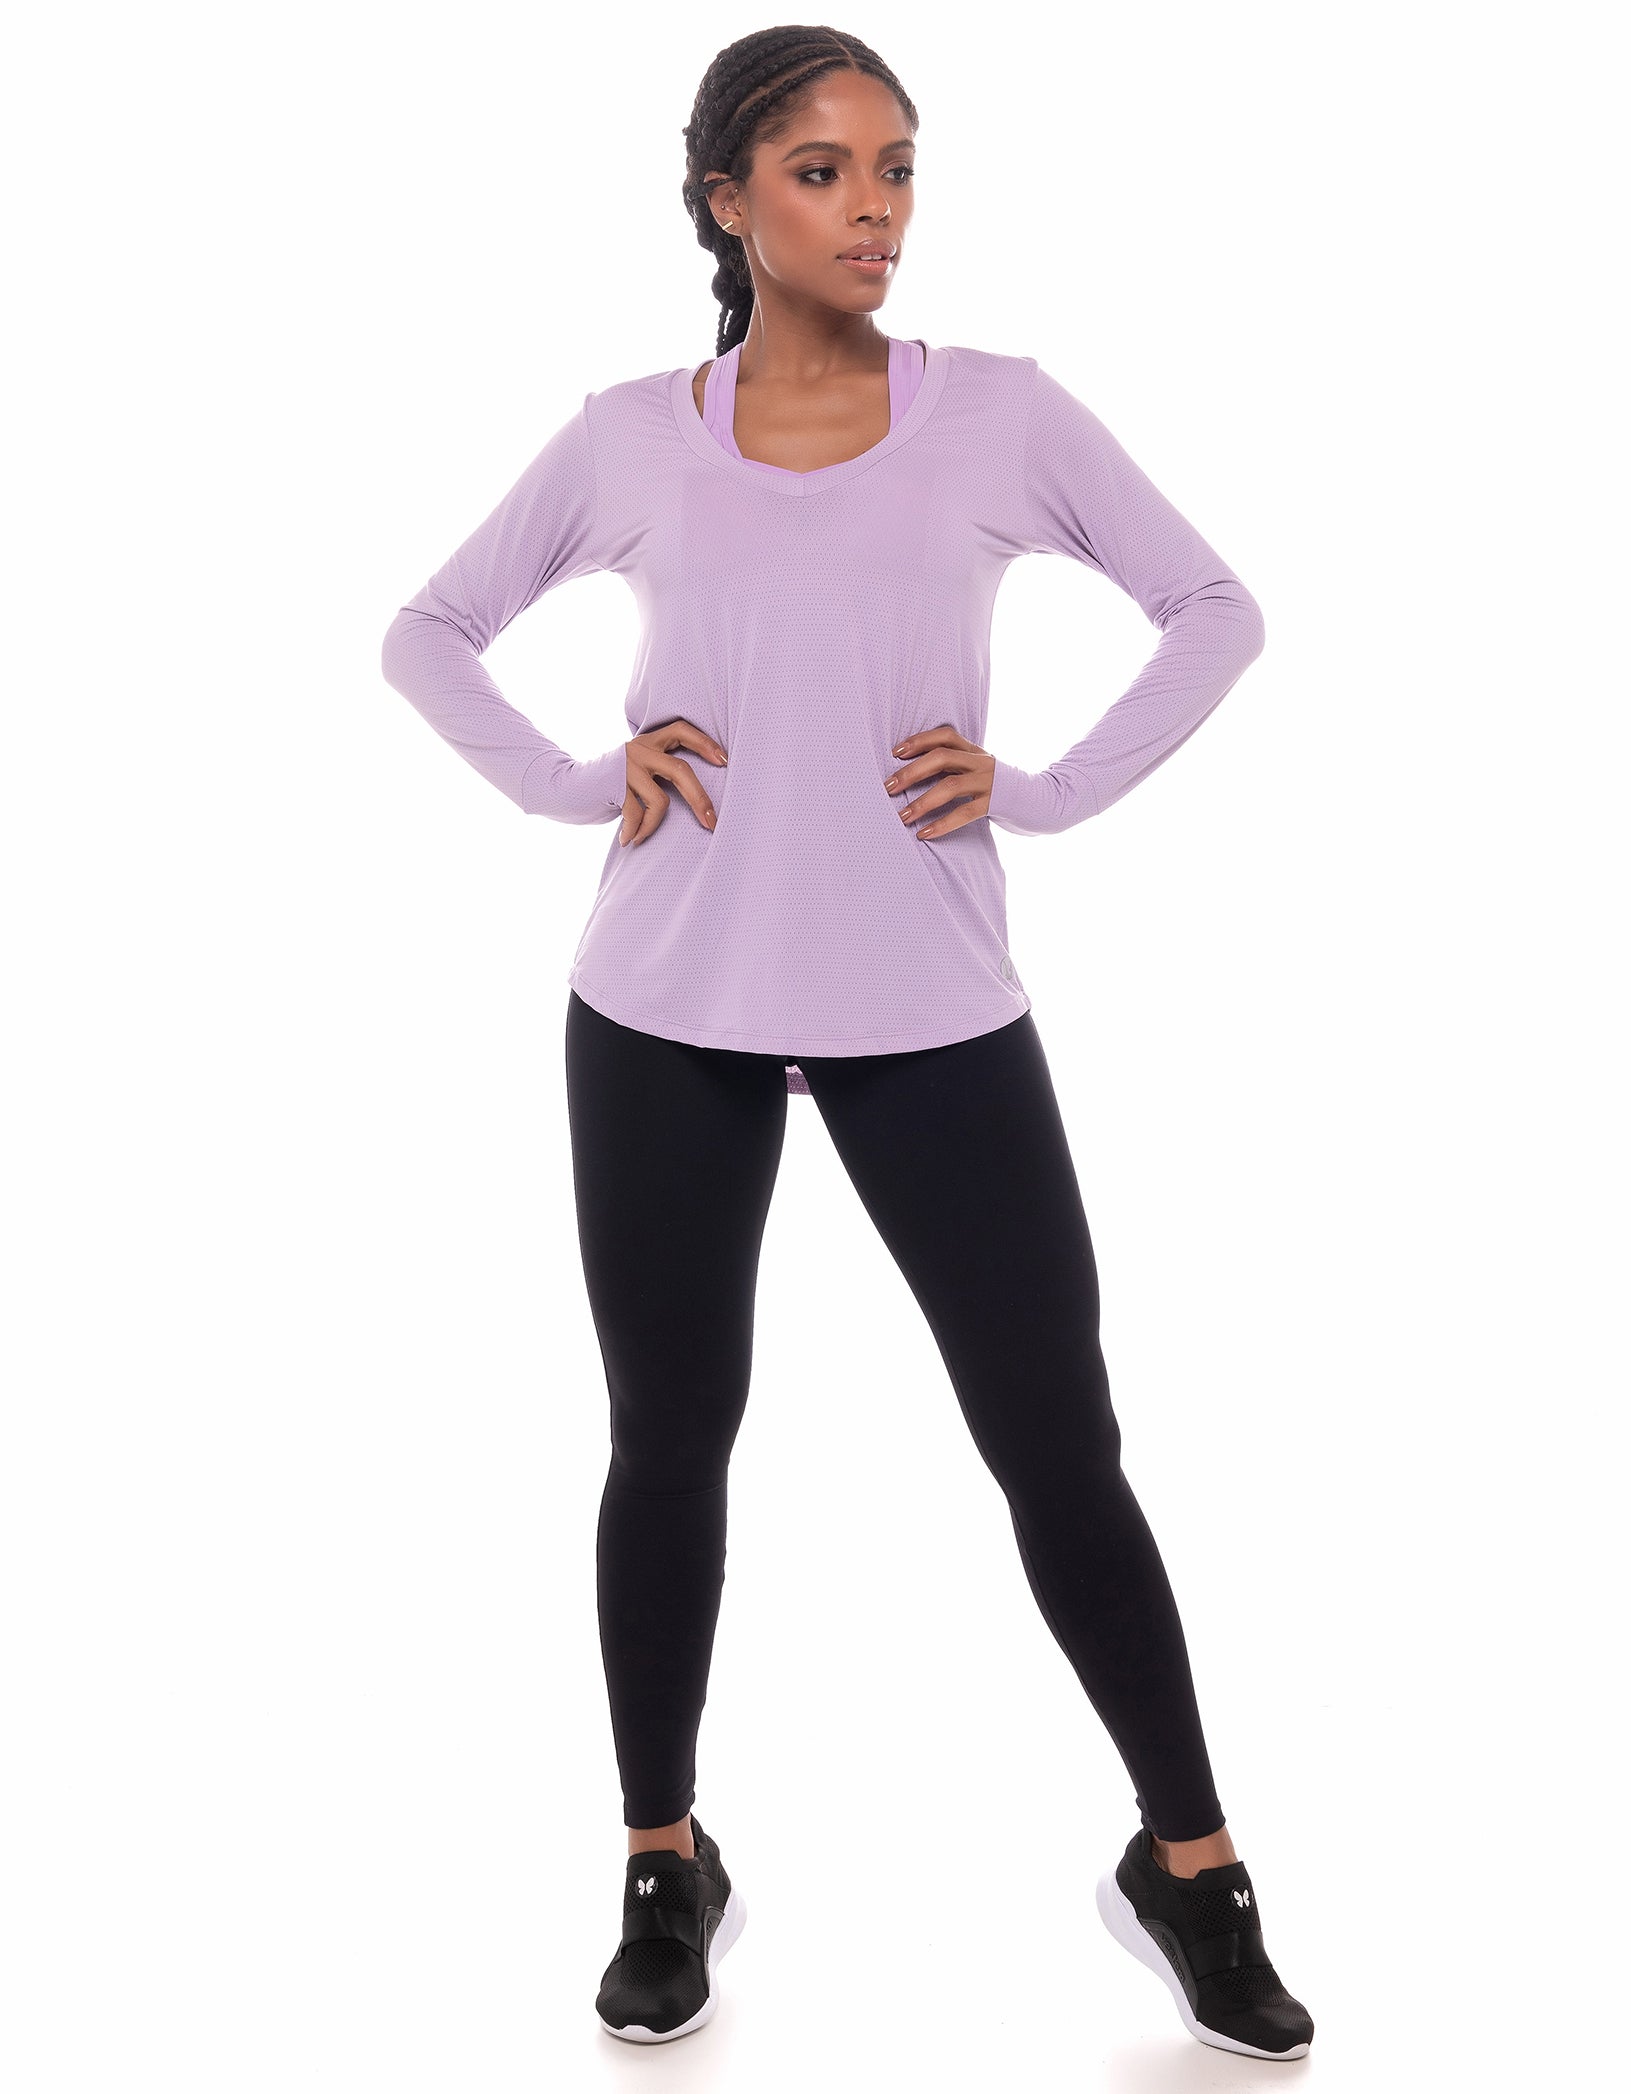 Vestem - Dry Fit Long Sleeve Shirt Janice Lilac Pink - BML16.C0023